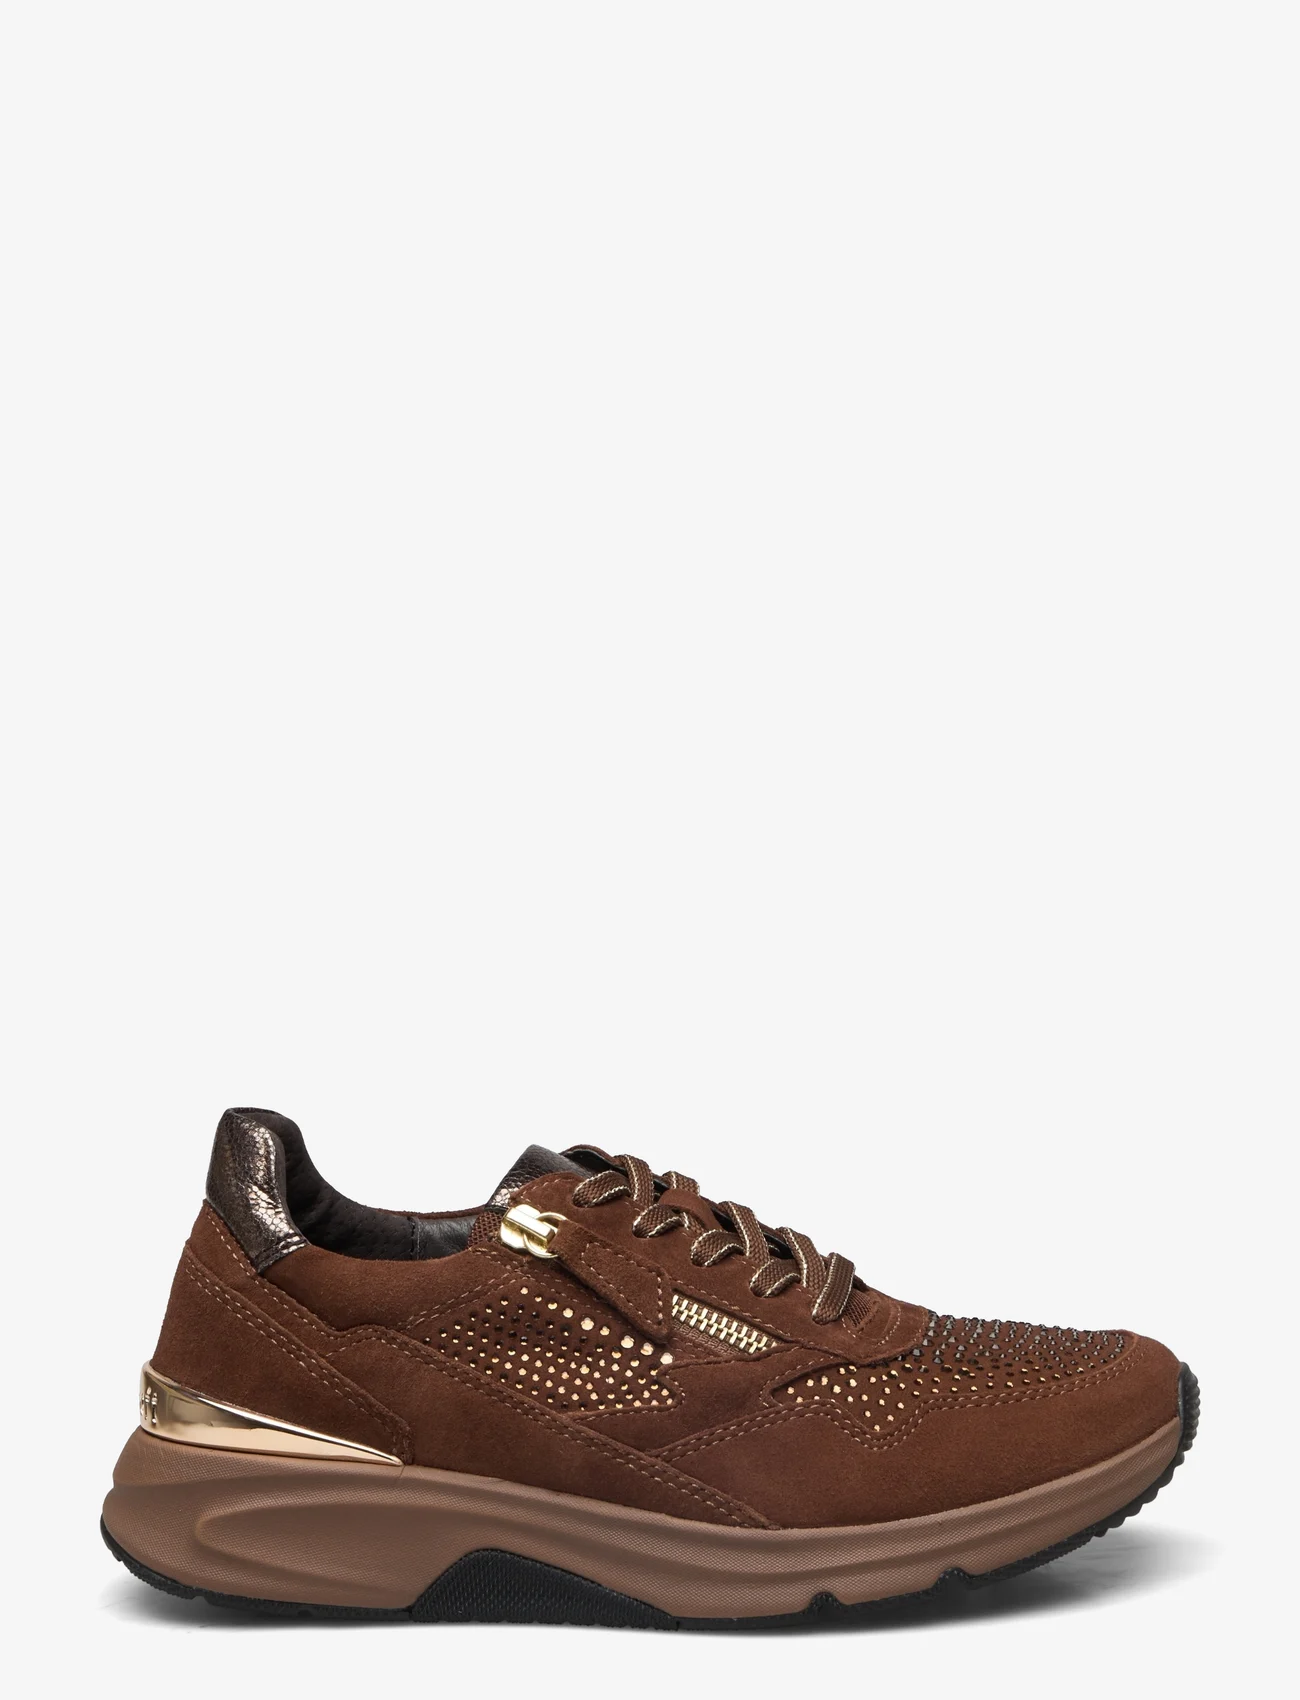 Gabor - rollingsoft sneaker - lave sneakers - brown - 1